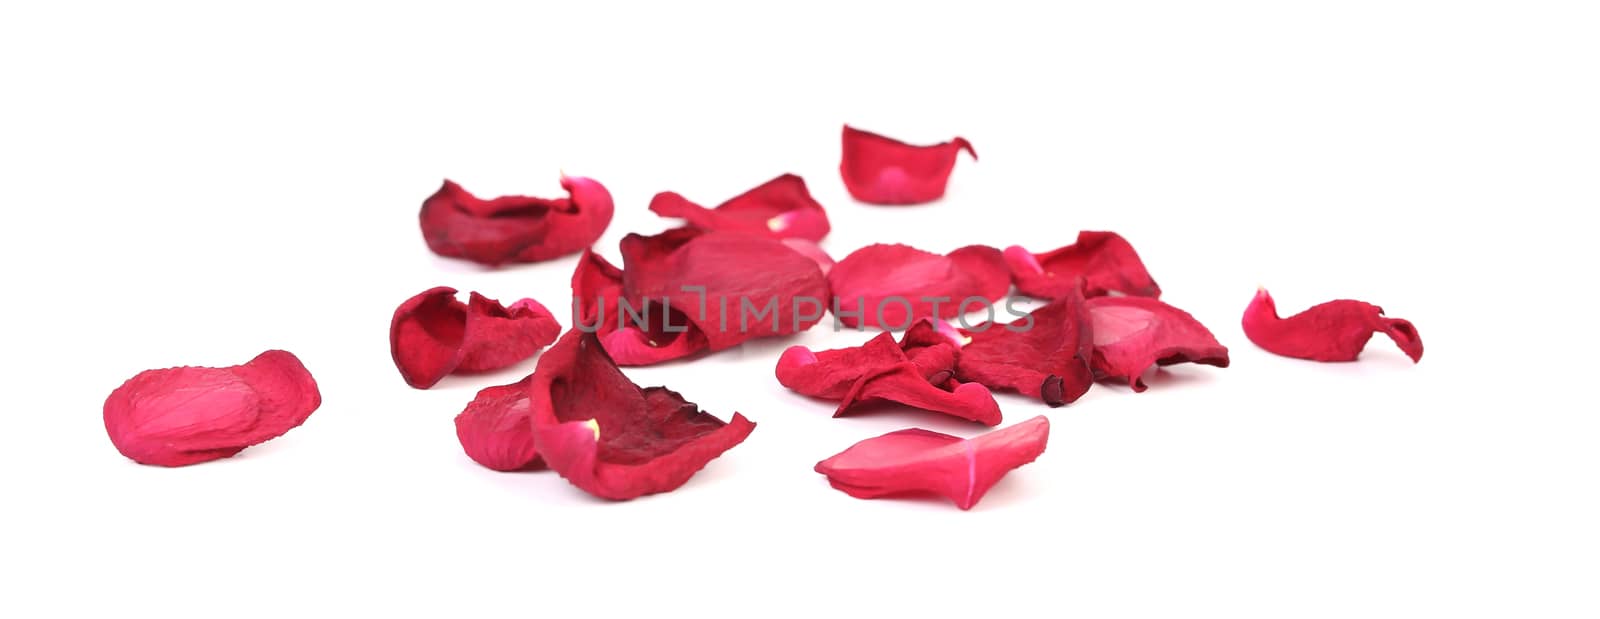 Beautiful red rose petals. by indigolotos